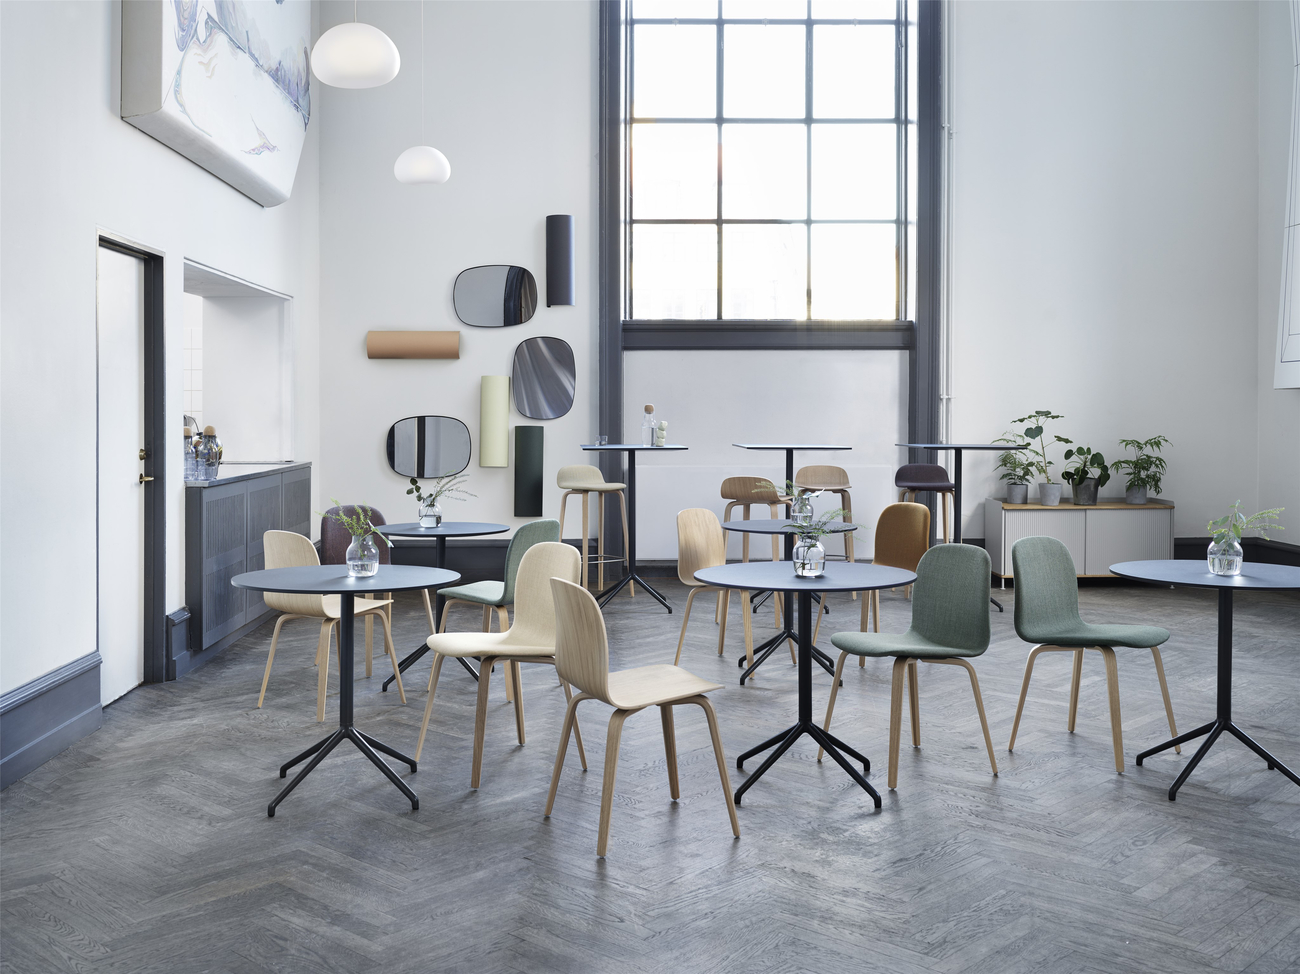 https://www.fundesign.nl/media/catalog/product/v/i/visu-chair-bar-stool-canvas-926-414-424-674-still-cafe-silent-framed-corky-fluid-enfold-horizontal-muuto-org__150__3.jpg